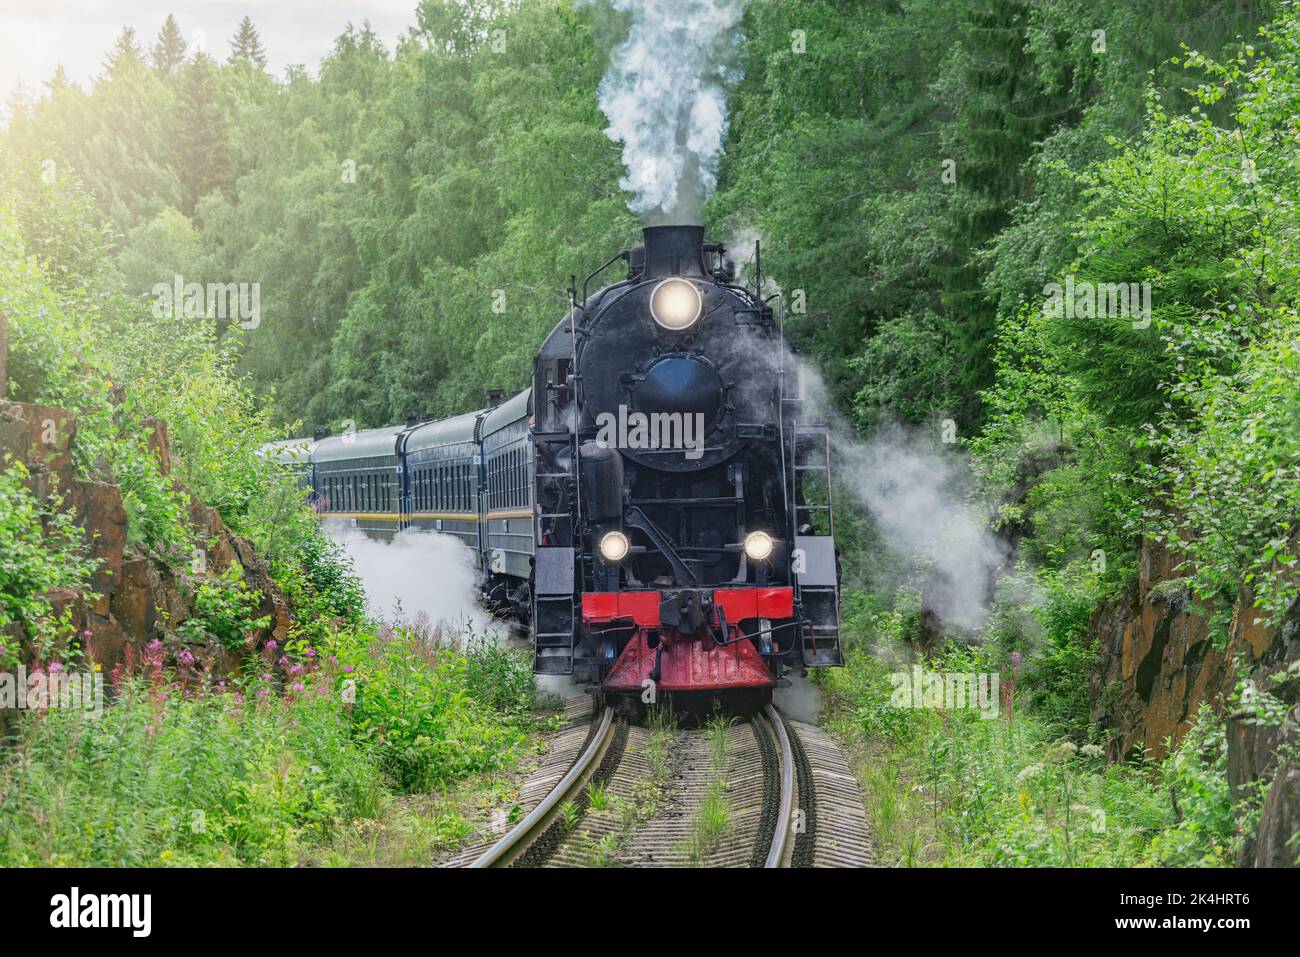 Black Retro Steam Train Railway Museum Stock Photo 2323363467